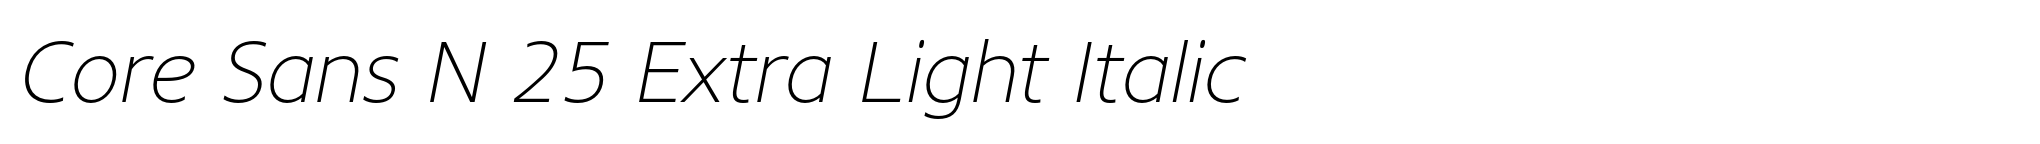 Core Sans N 25 Extra Light Italic image